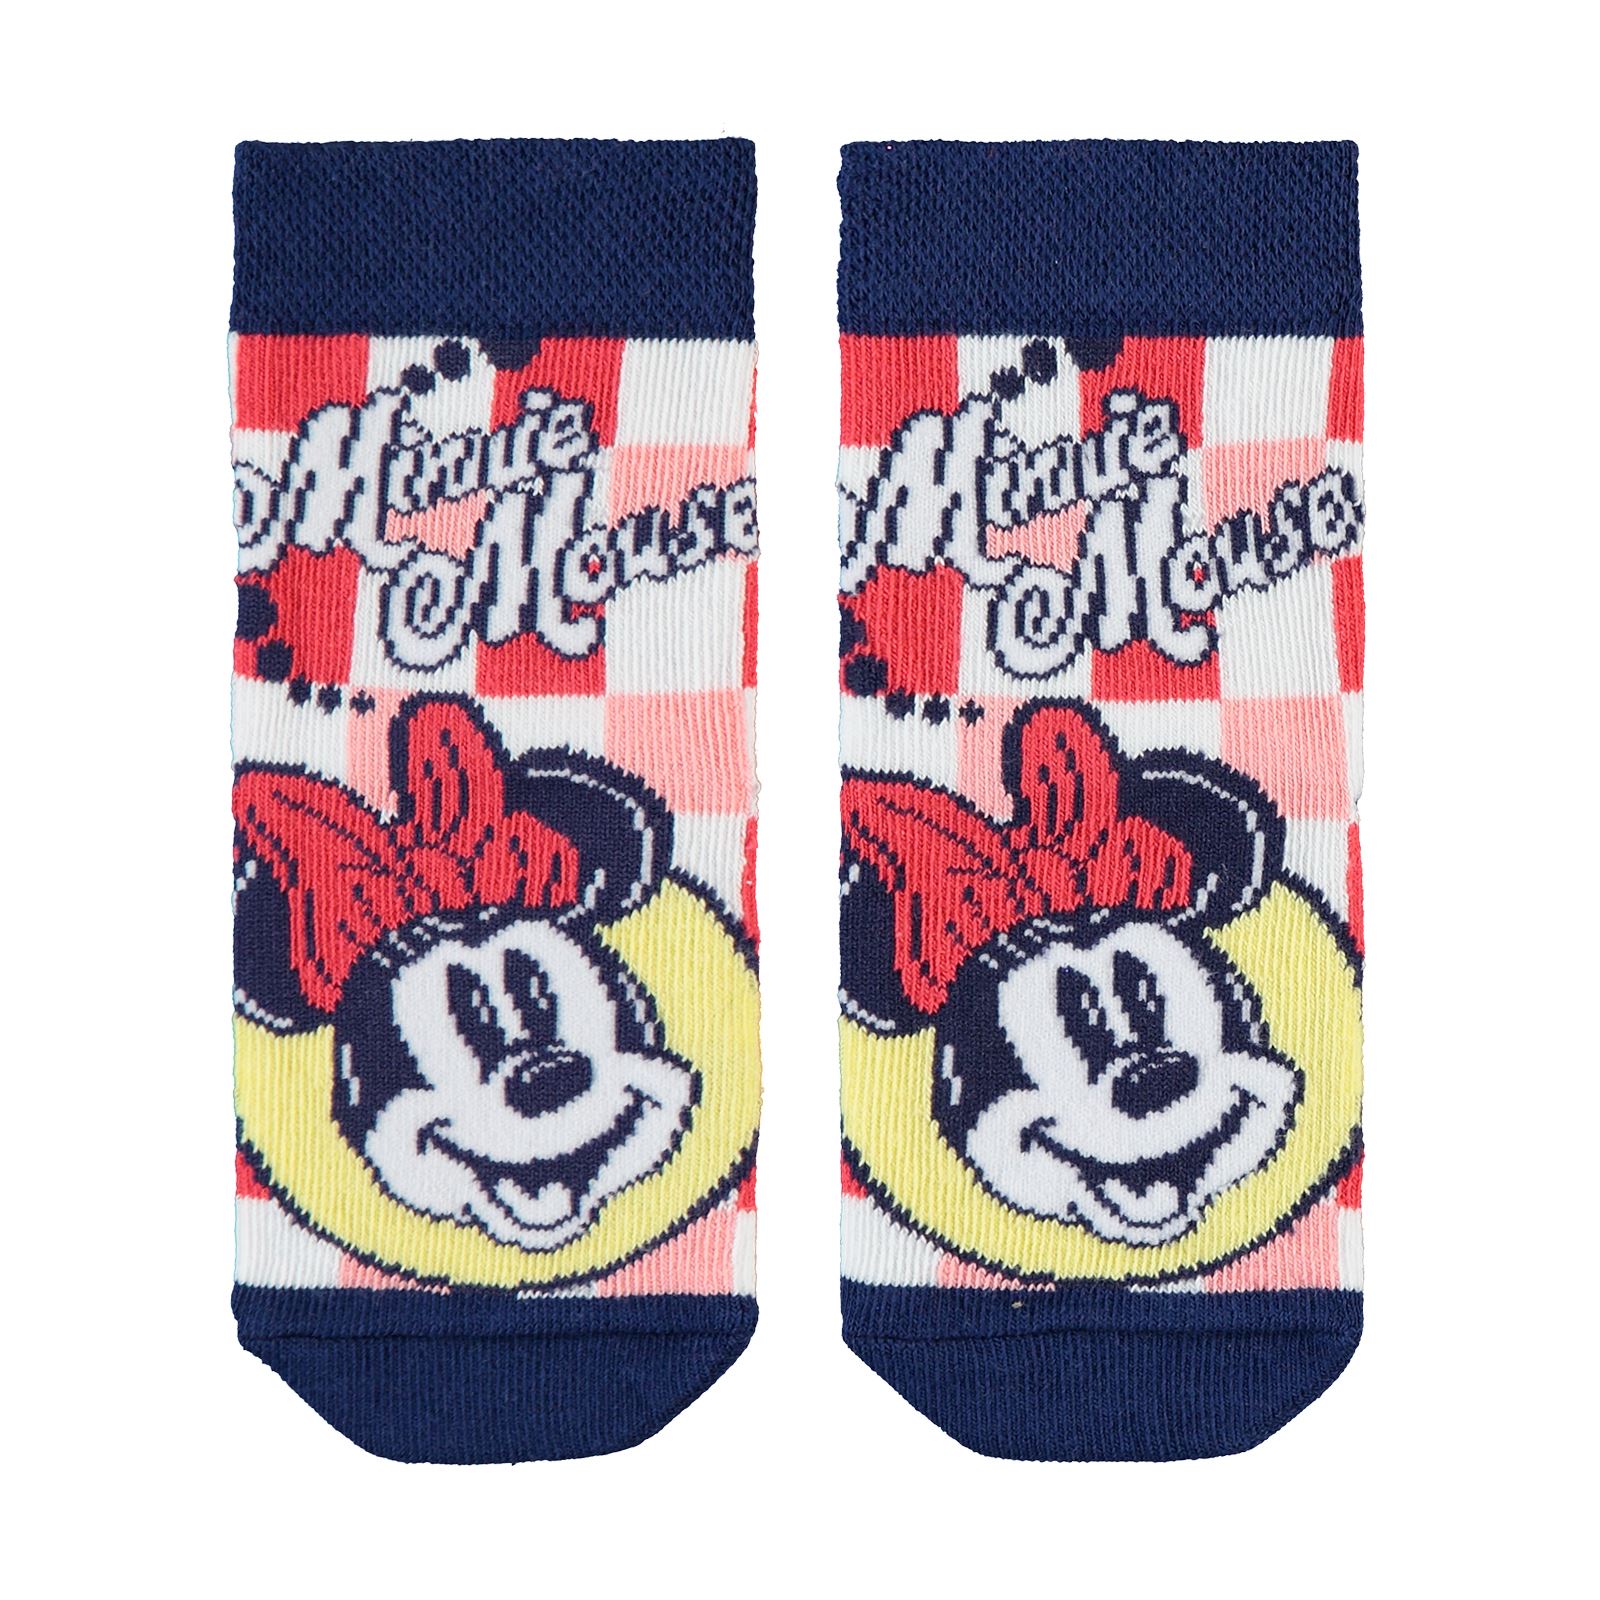 Minnie Mouse Kız Çocuk Çorap 3-11 Yaş Lacivert